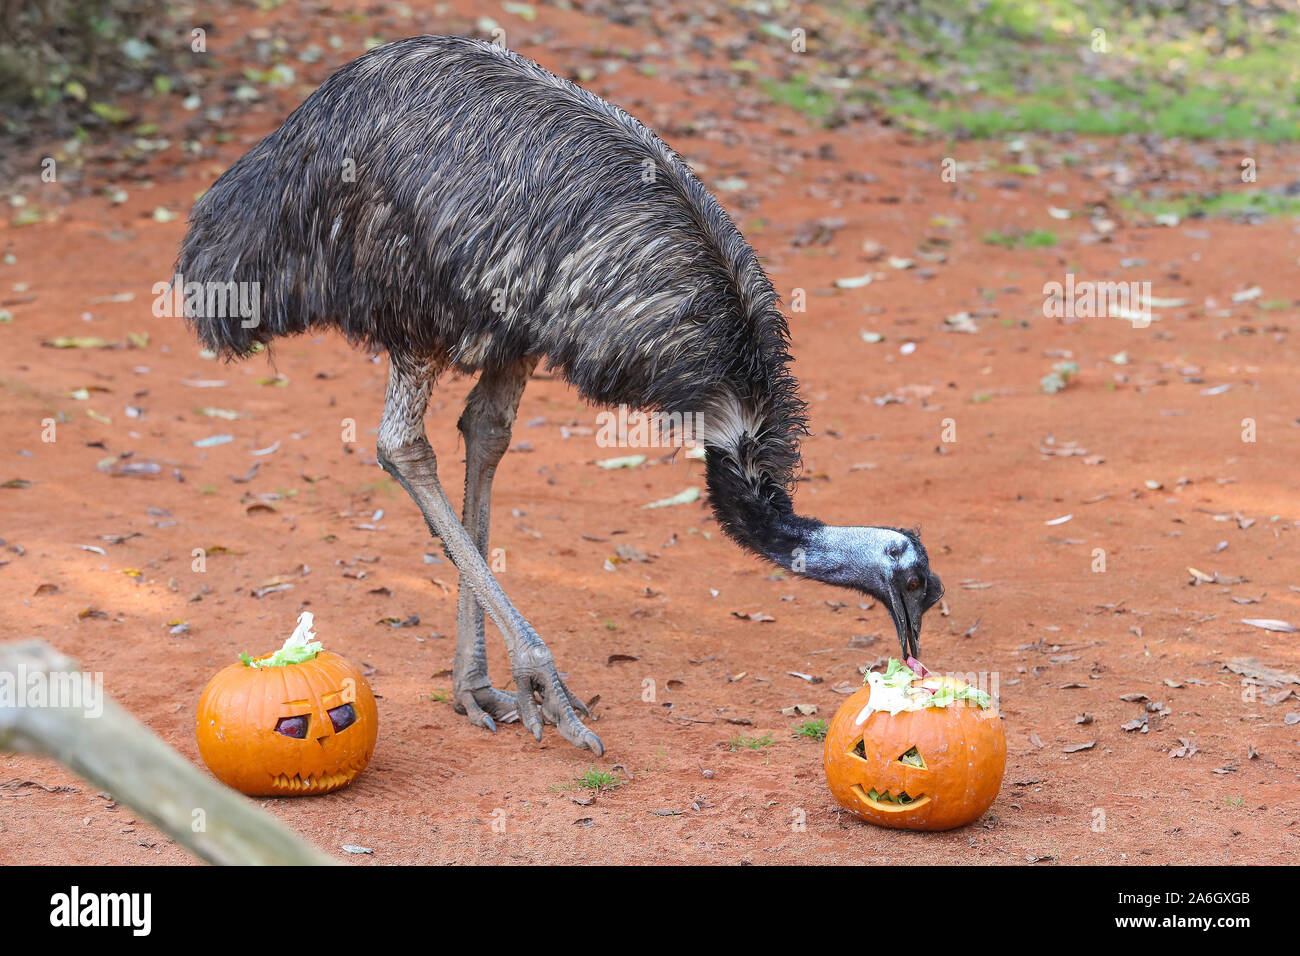 Zagreb, Croatia. 26th Oct, 2019. An emu eats food from a Halloween pumpkin in the zoo of Zagreb, Croatia, on Oct. 26, 2019. Credit: Xinhua/Alamy Live News Stock Photo